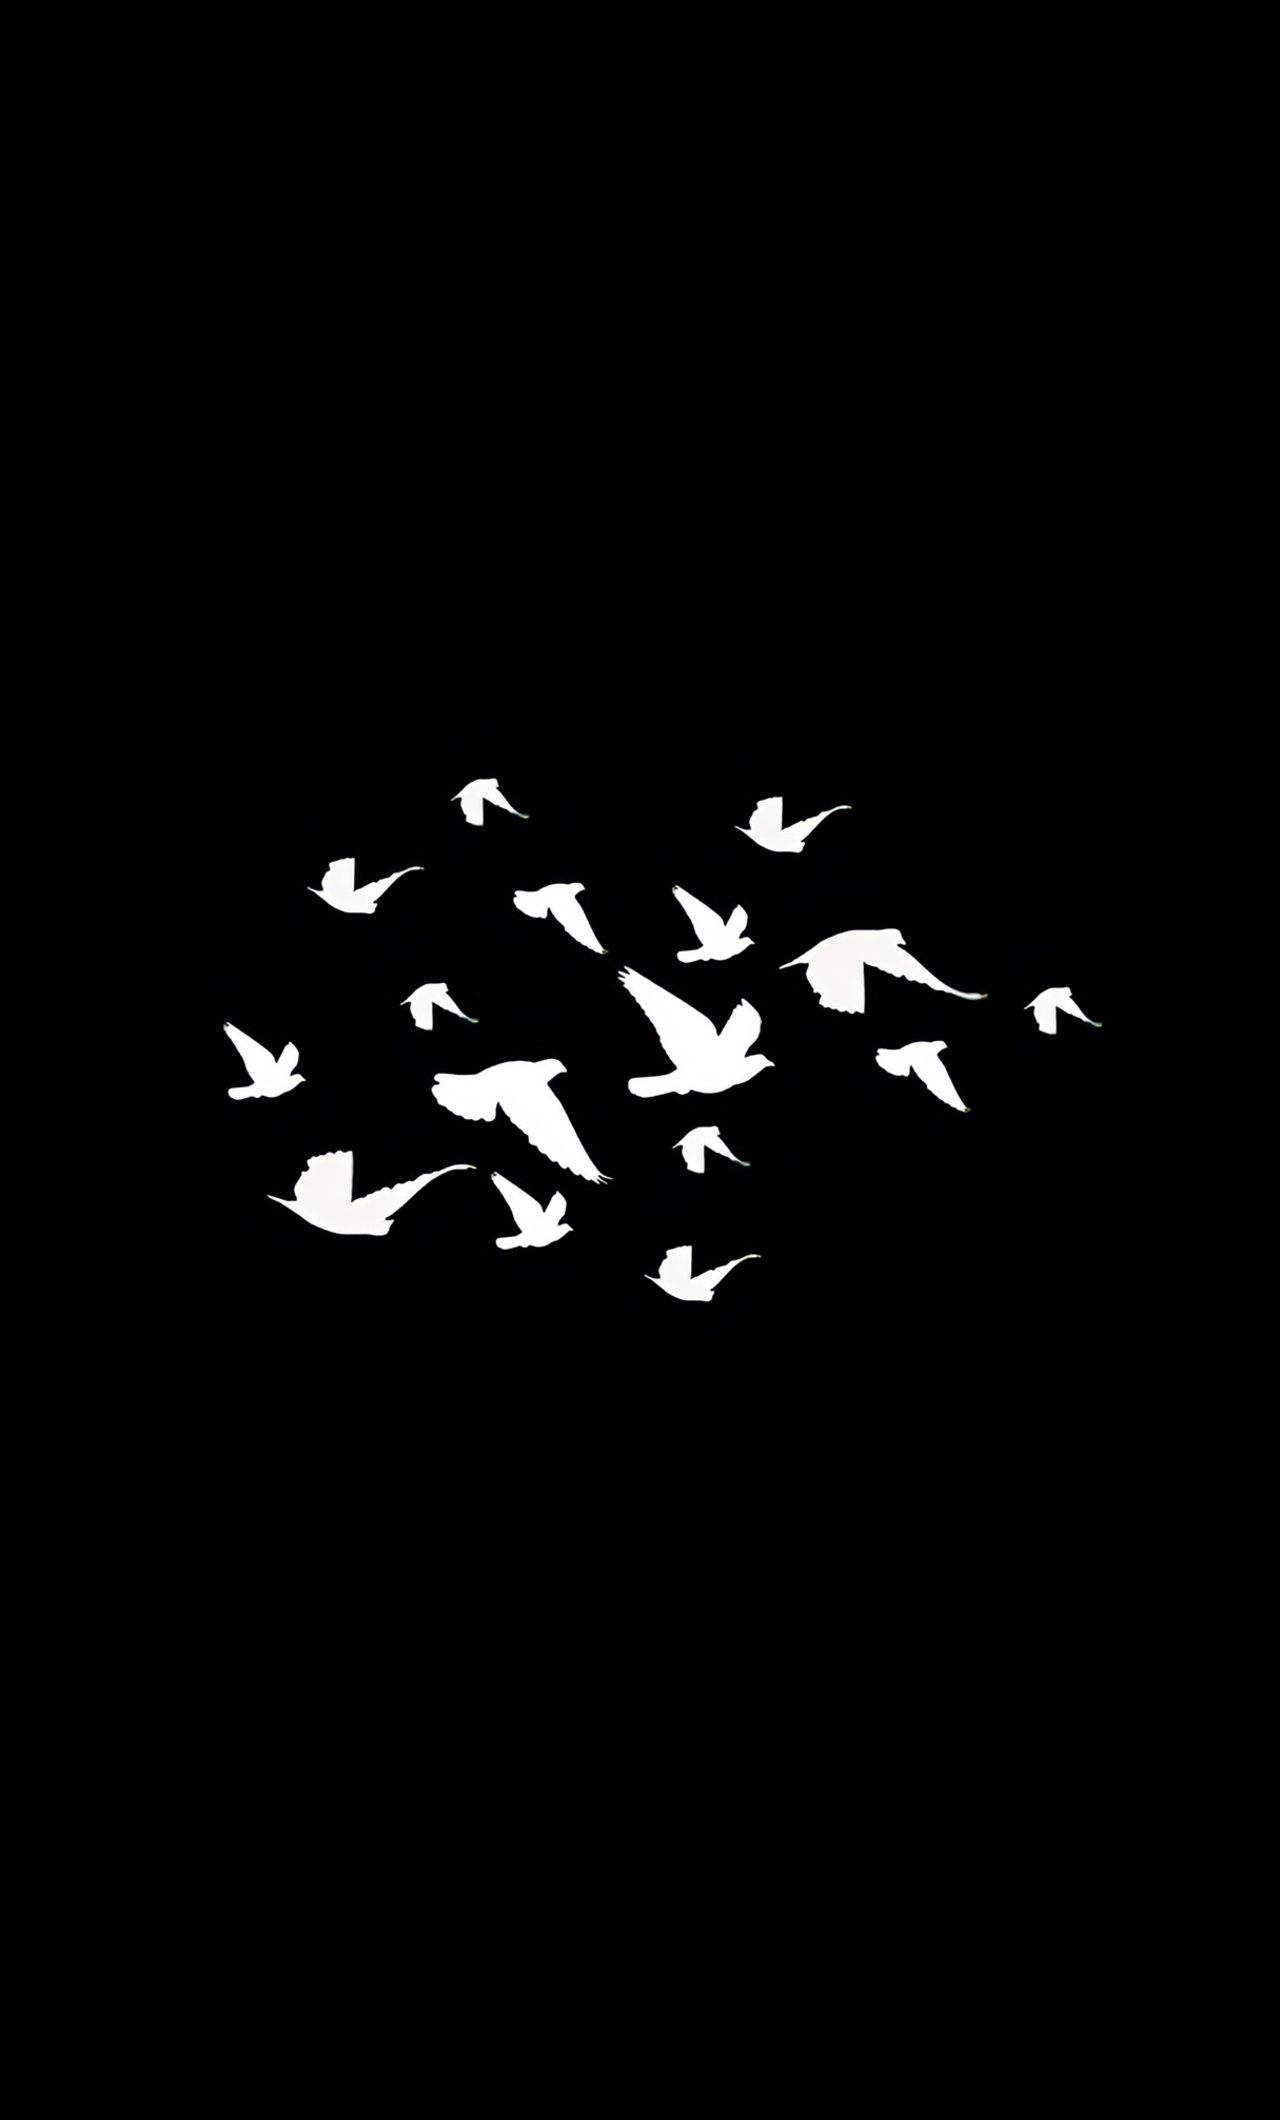 A flock of birds flying in the dark - 